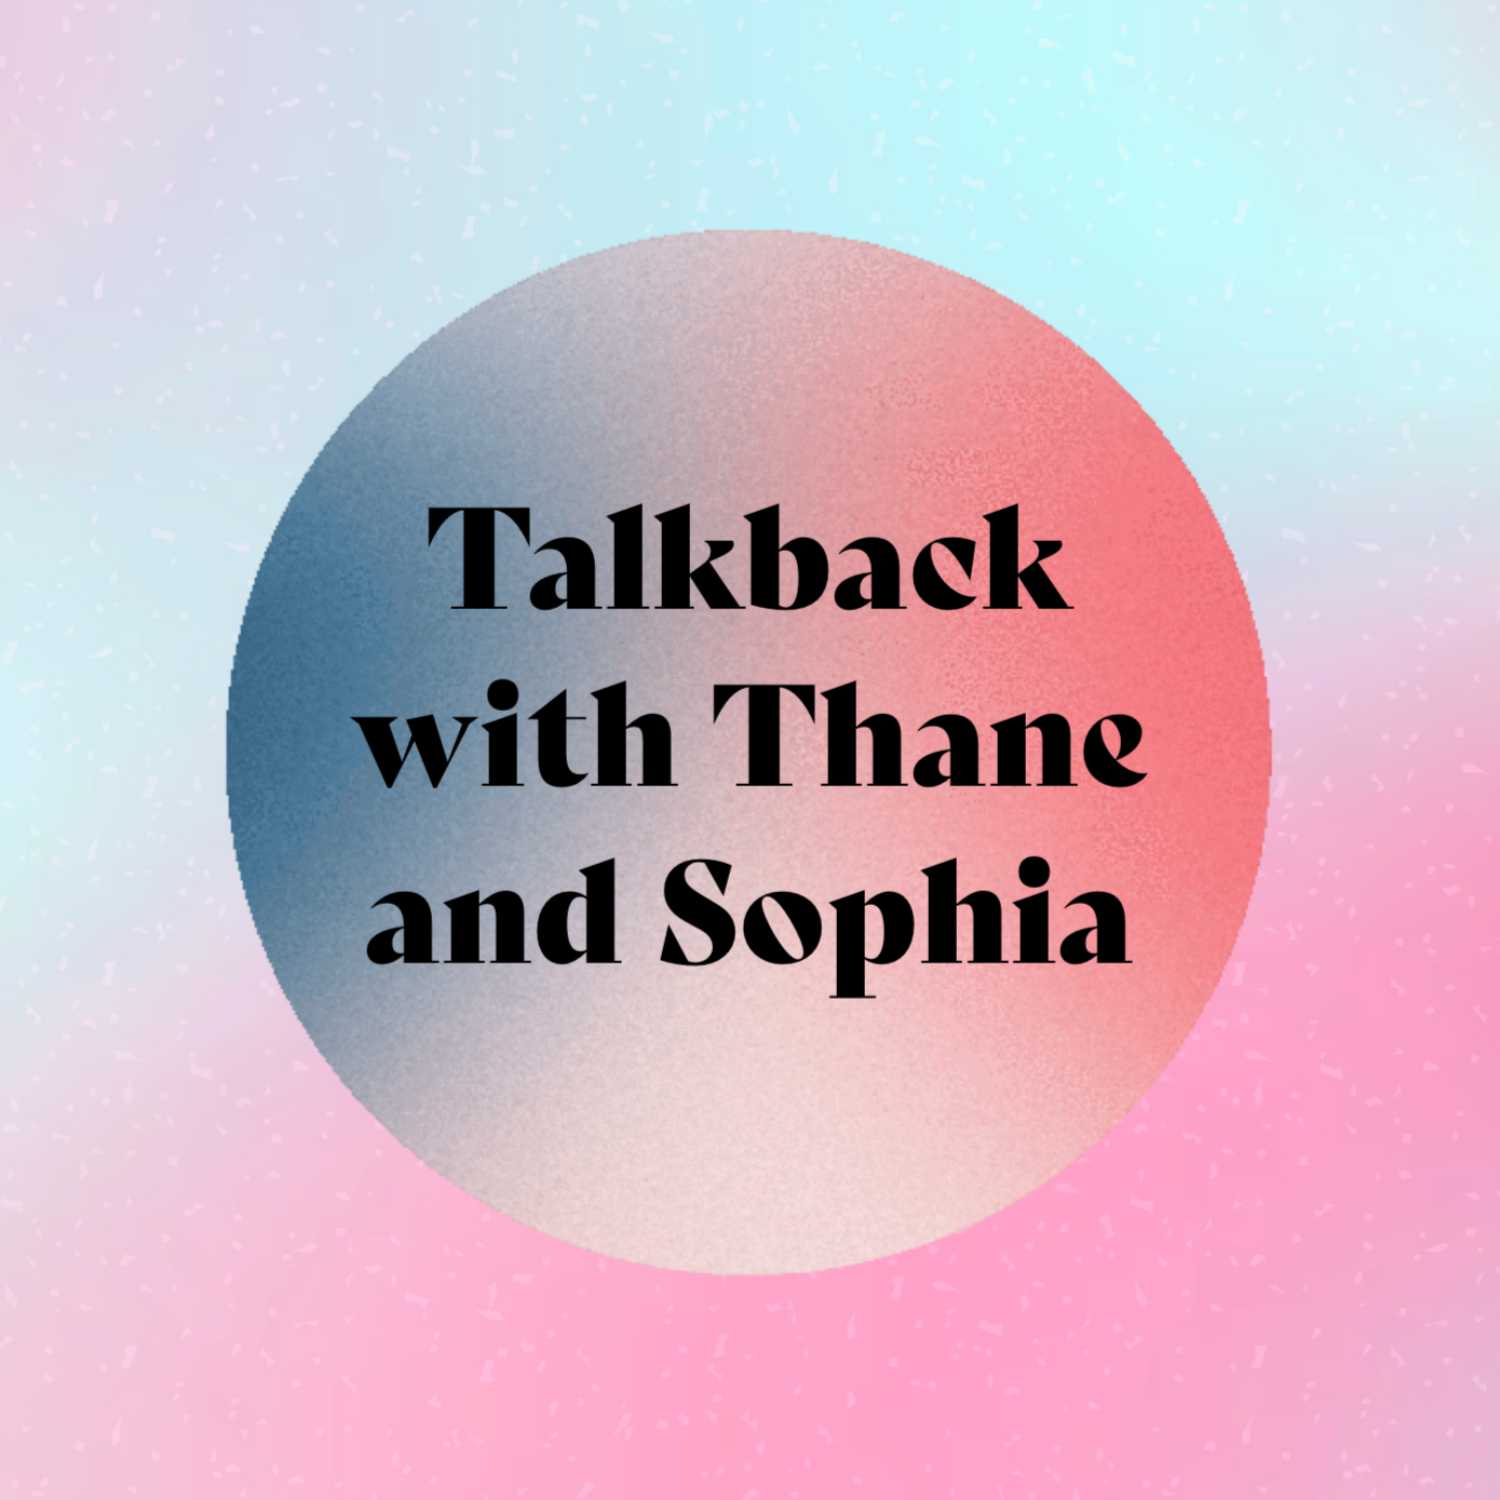 Artwork for podcast Talkback Weeknights